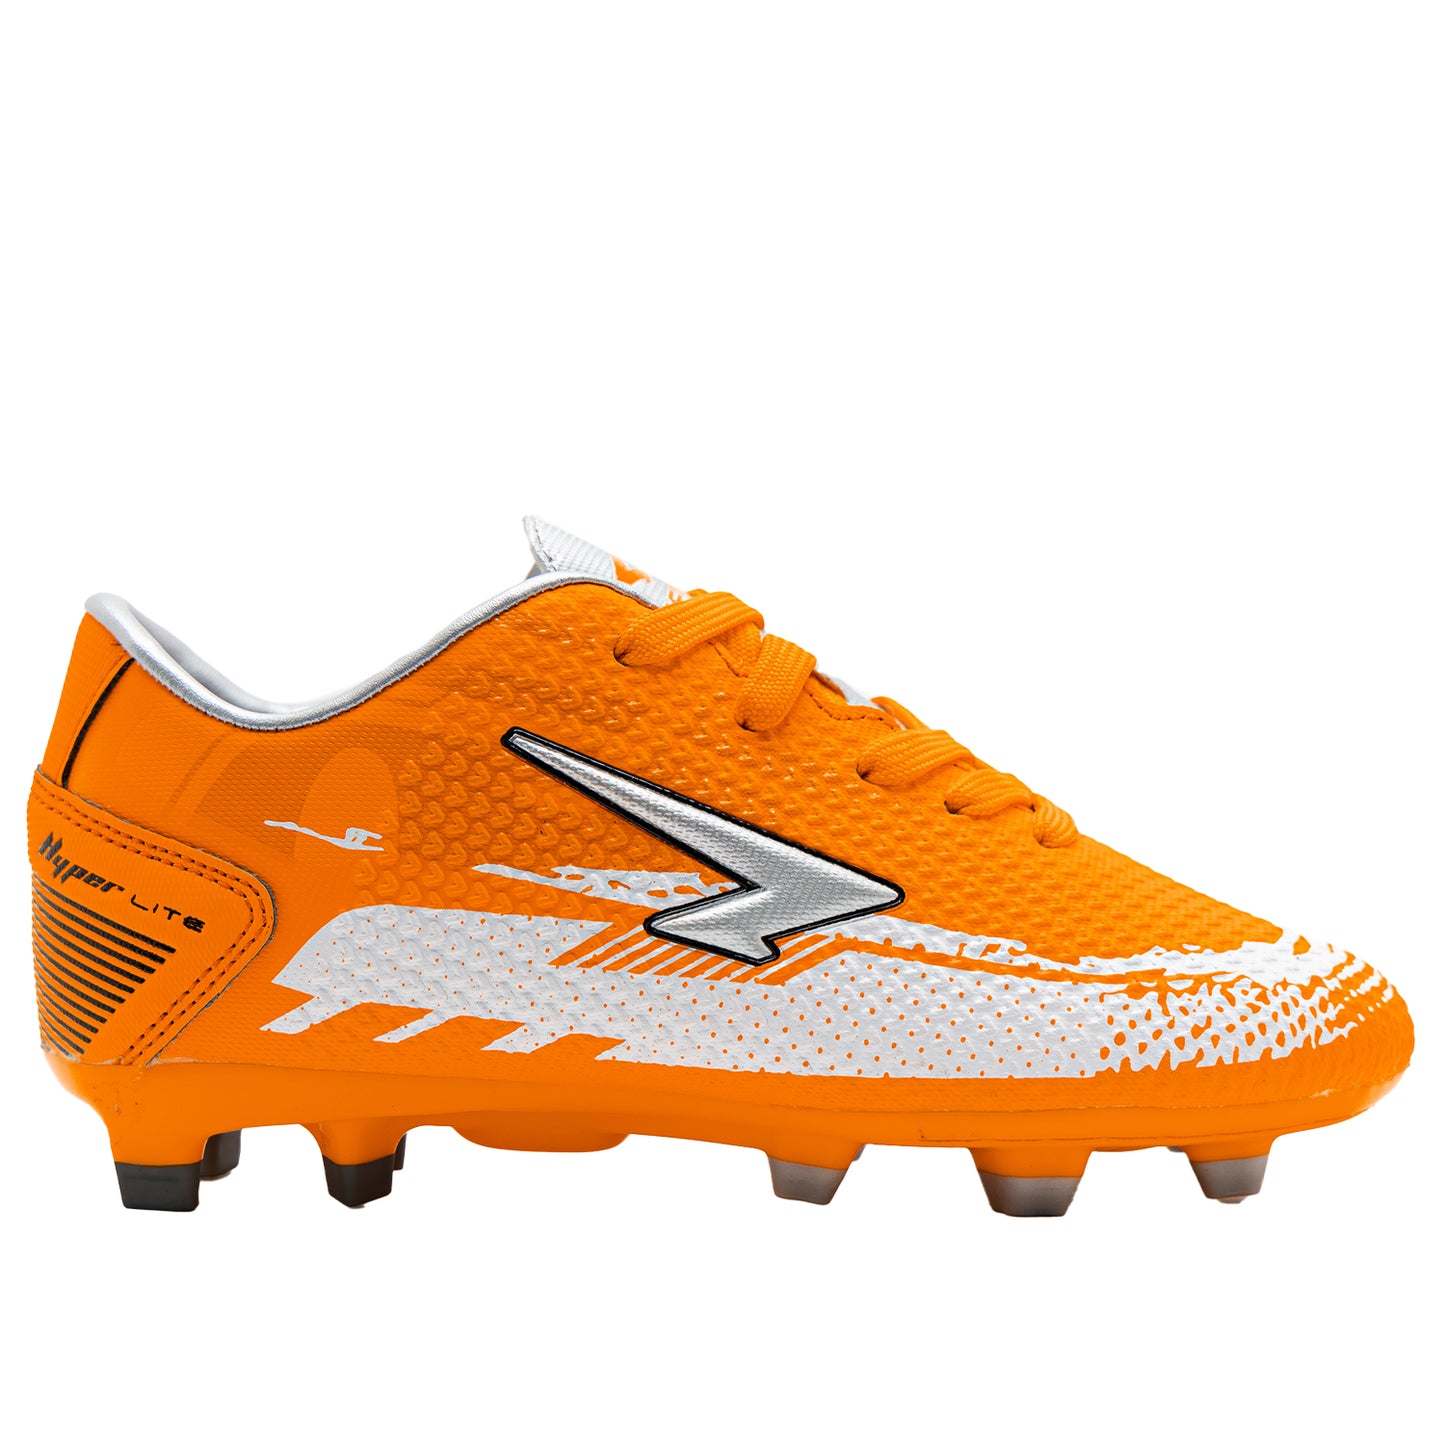 Knight XTR Junior Football Boots - Orange/Silver